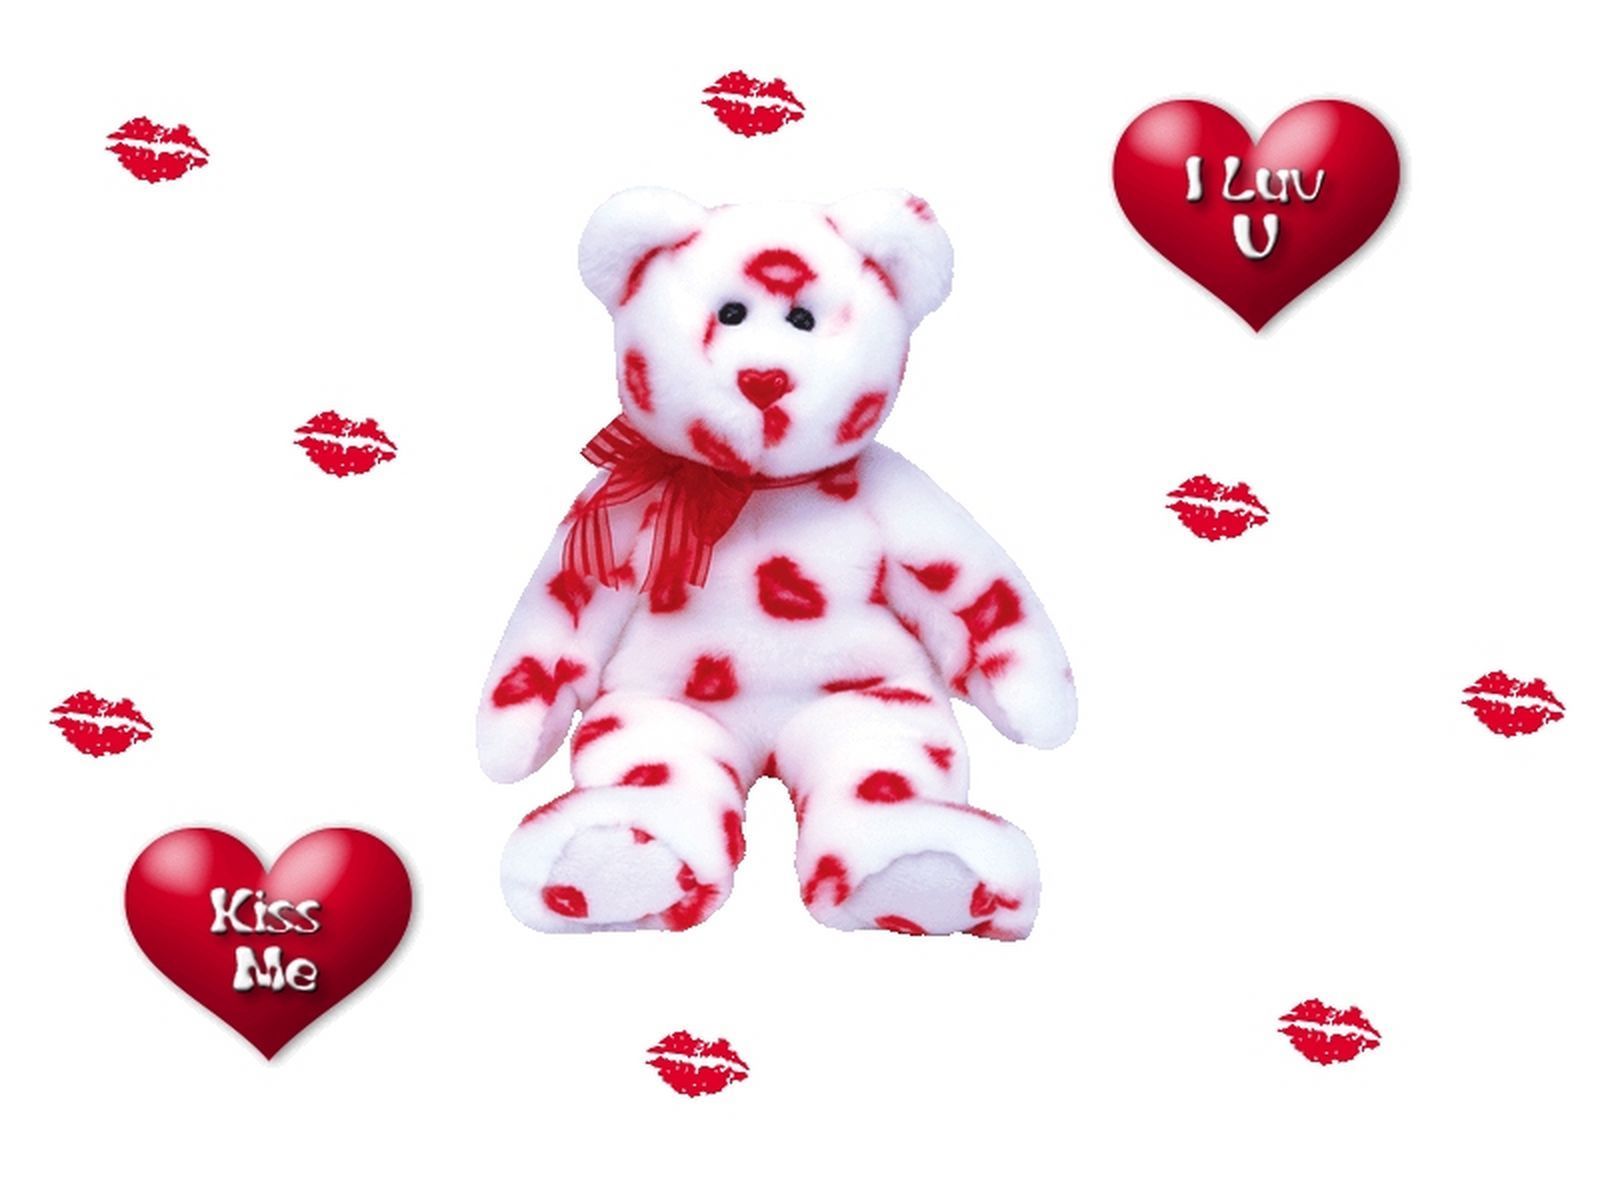 love wallpaper hd full size,red,stuffed toy,valentine's day,heart,teddy bear